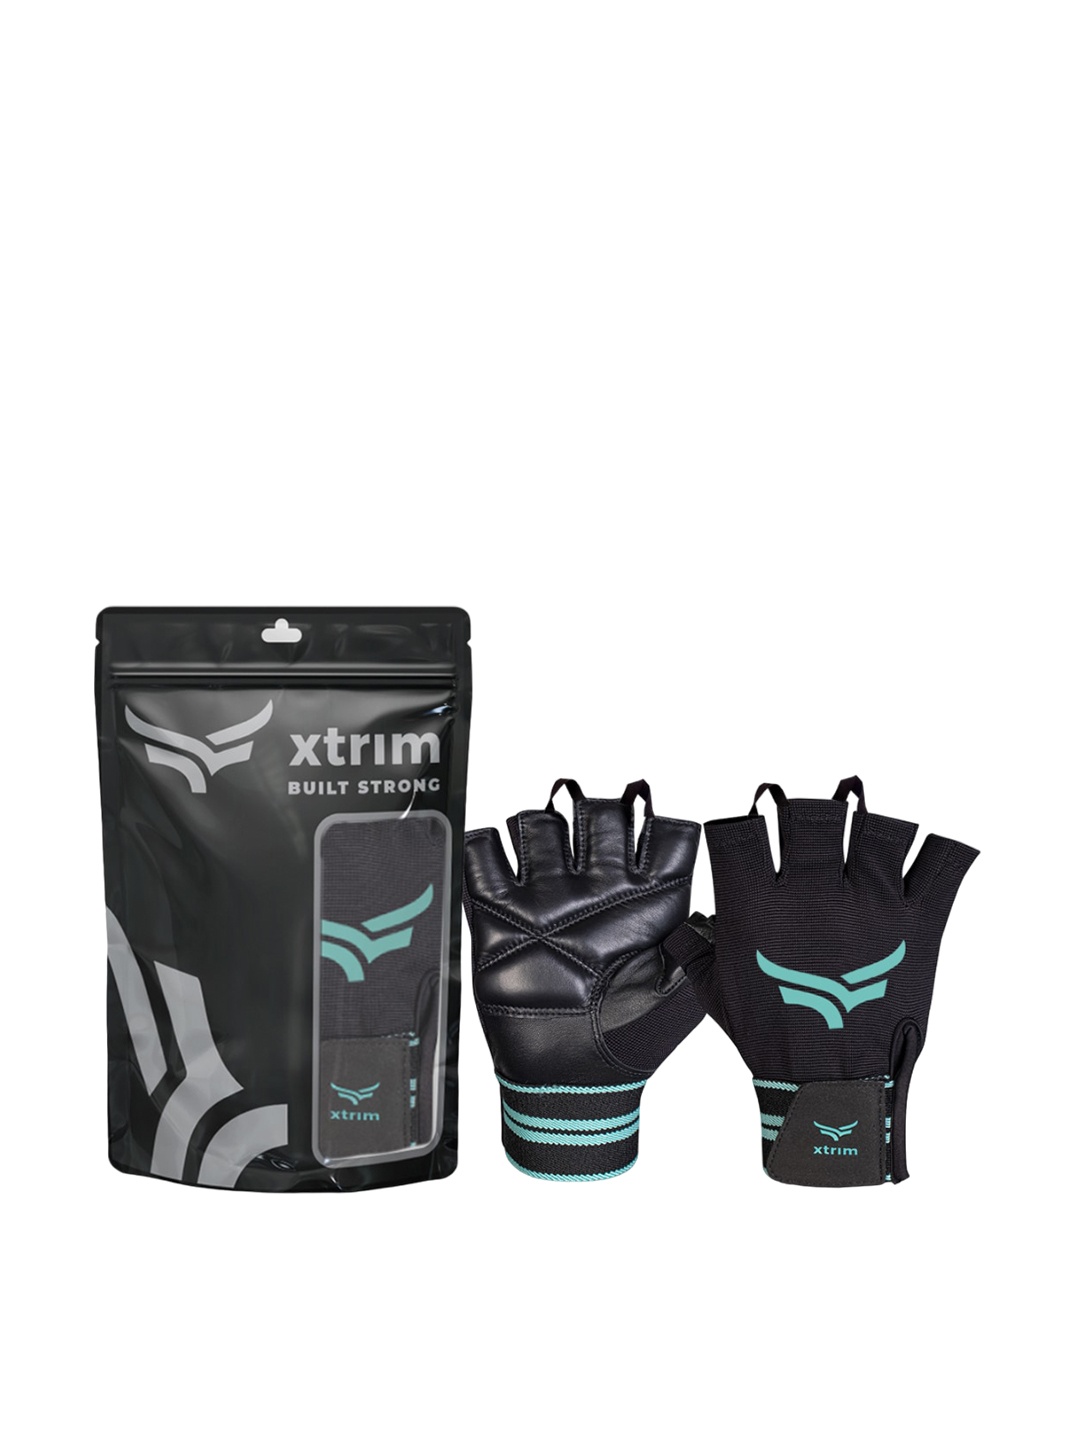 

Xtrim Unisex Leather Sport Gloves, Black